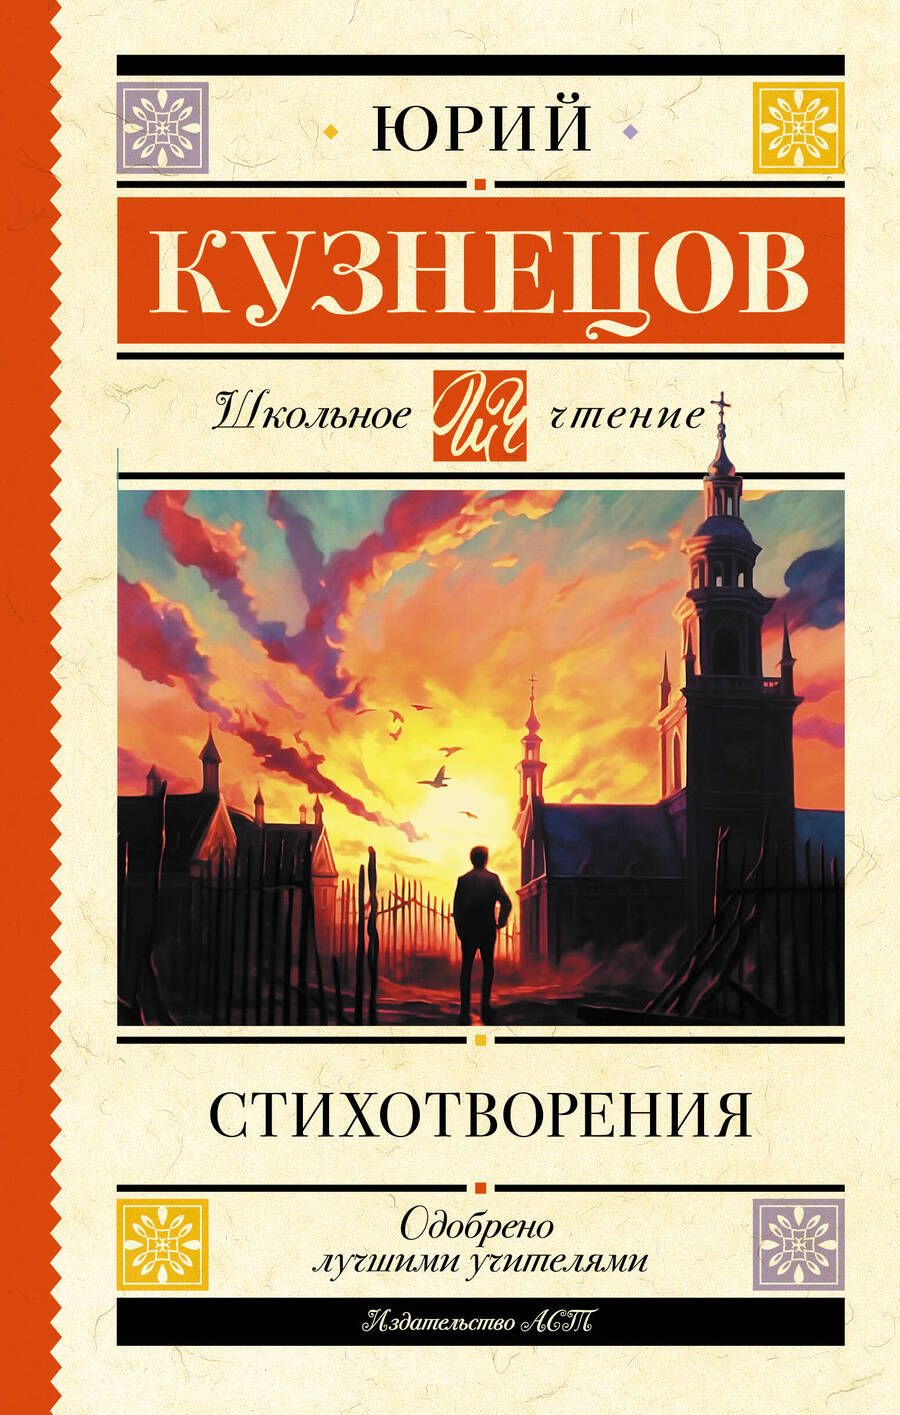 Обложка книги "Кузнецов: Стихотворения"